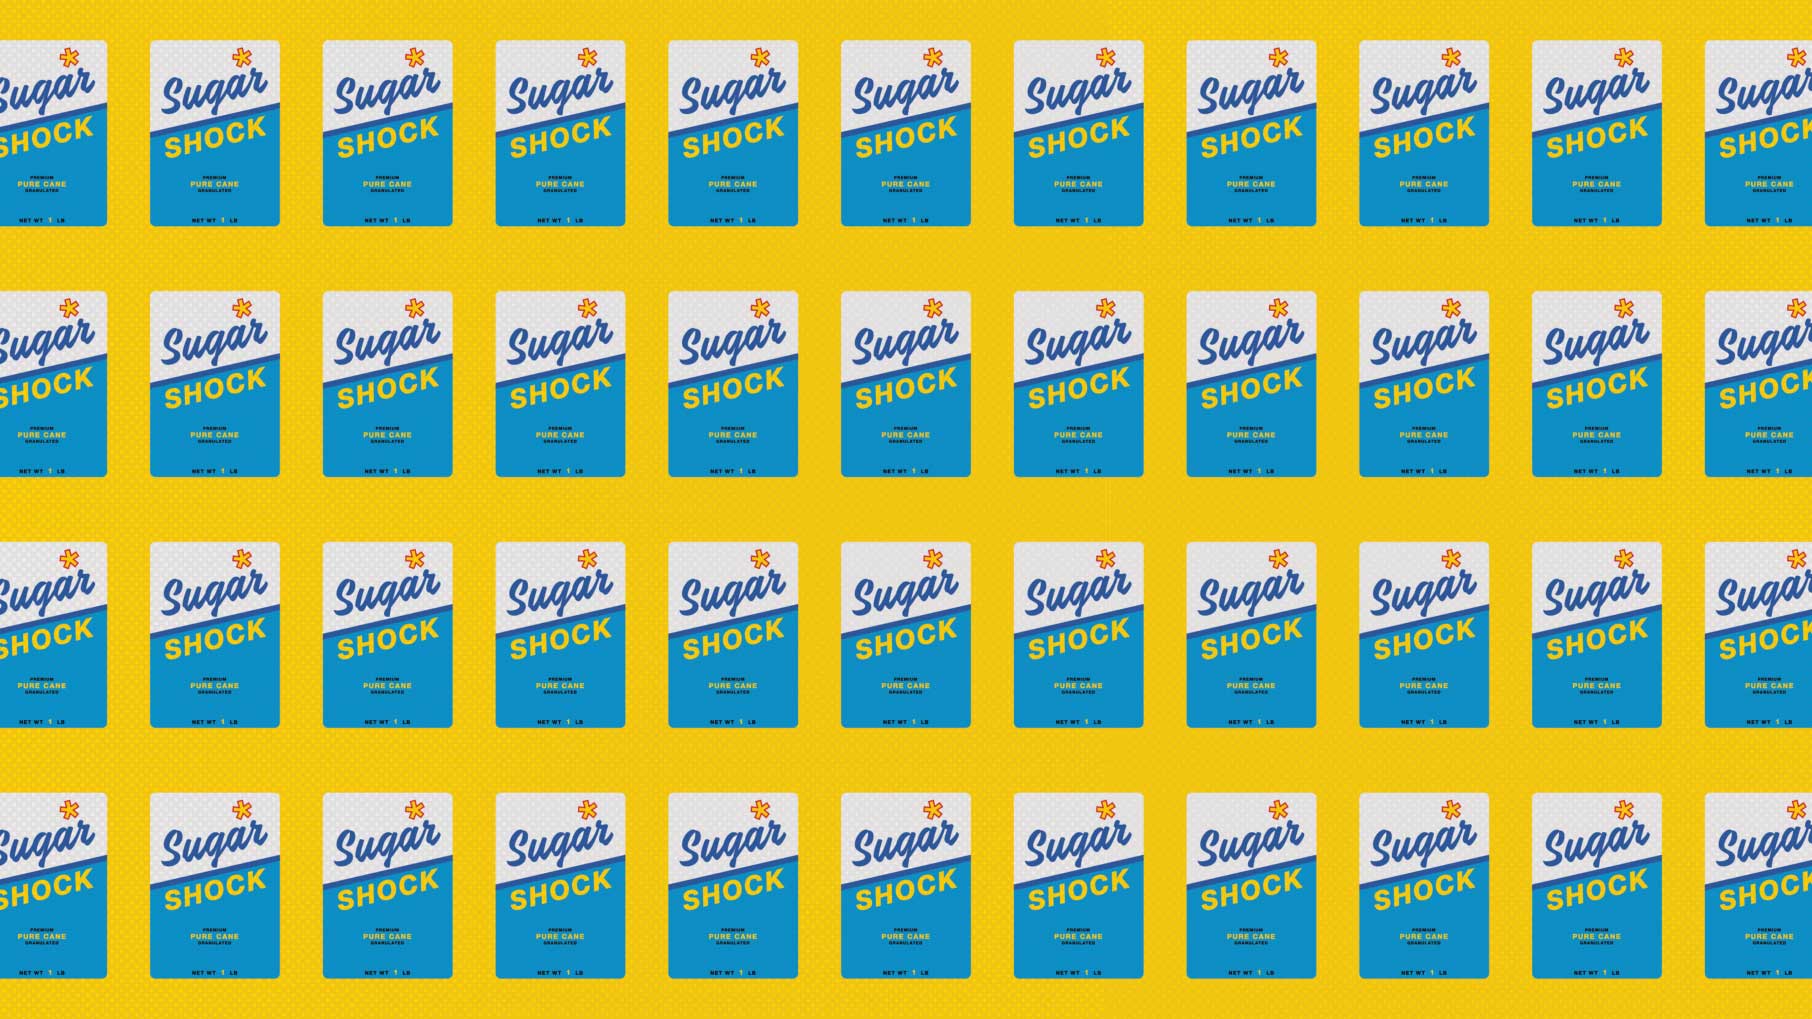 Sugar's Sick Secrets: How Industry 